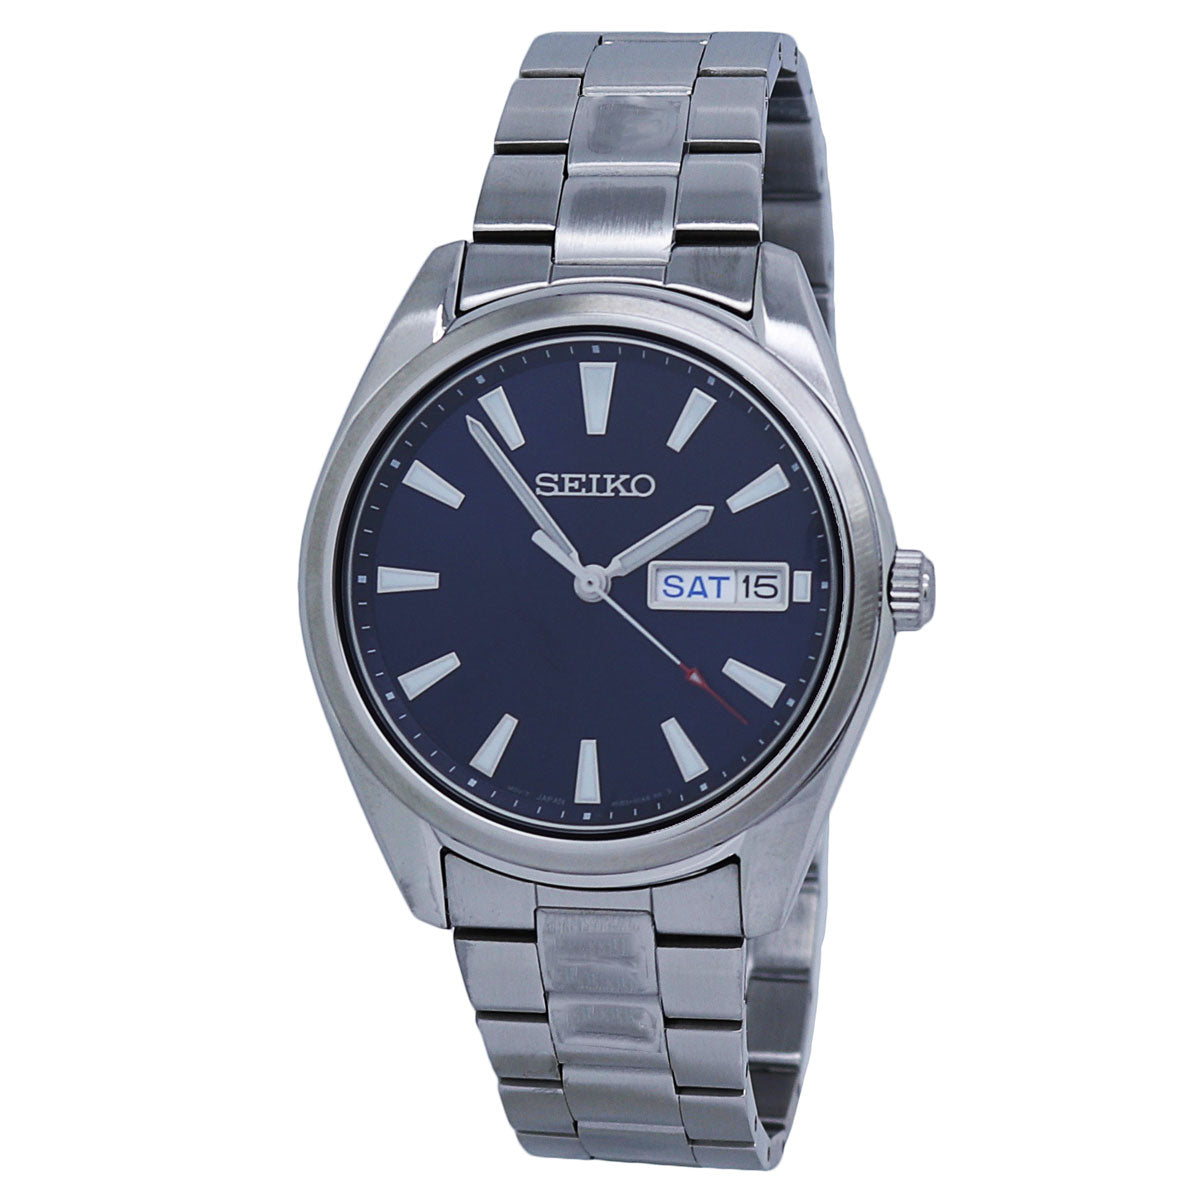 Seiko Quartz Blue Dial Stainless Steel Men's Watch SUR341 – pass the watch